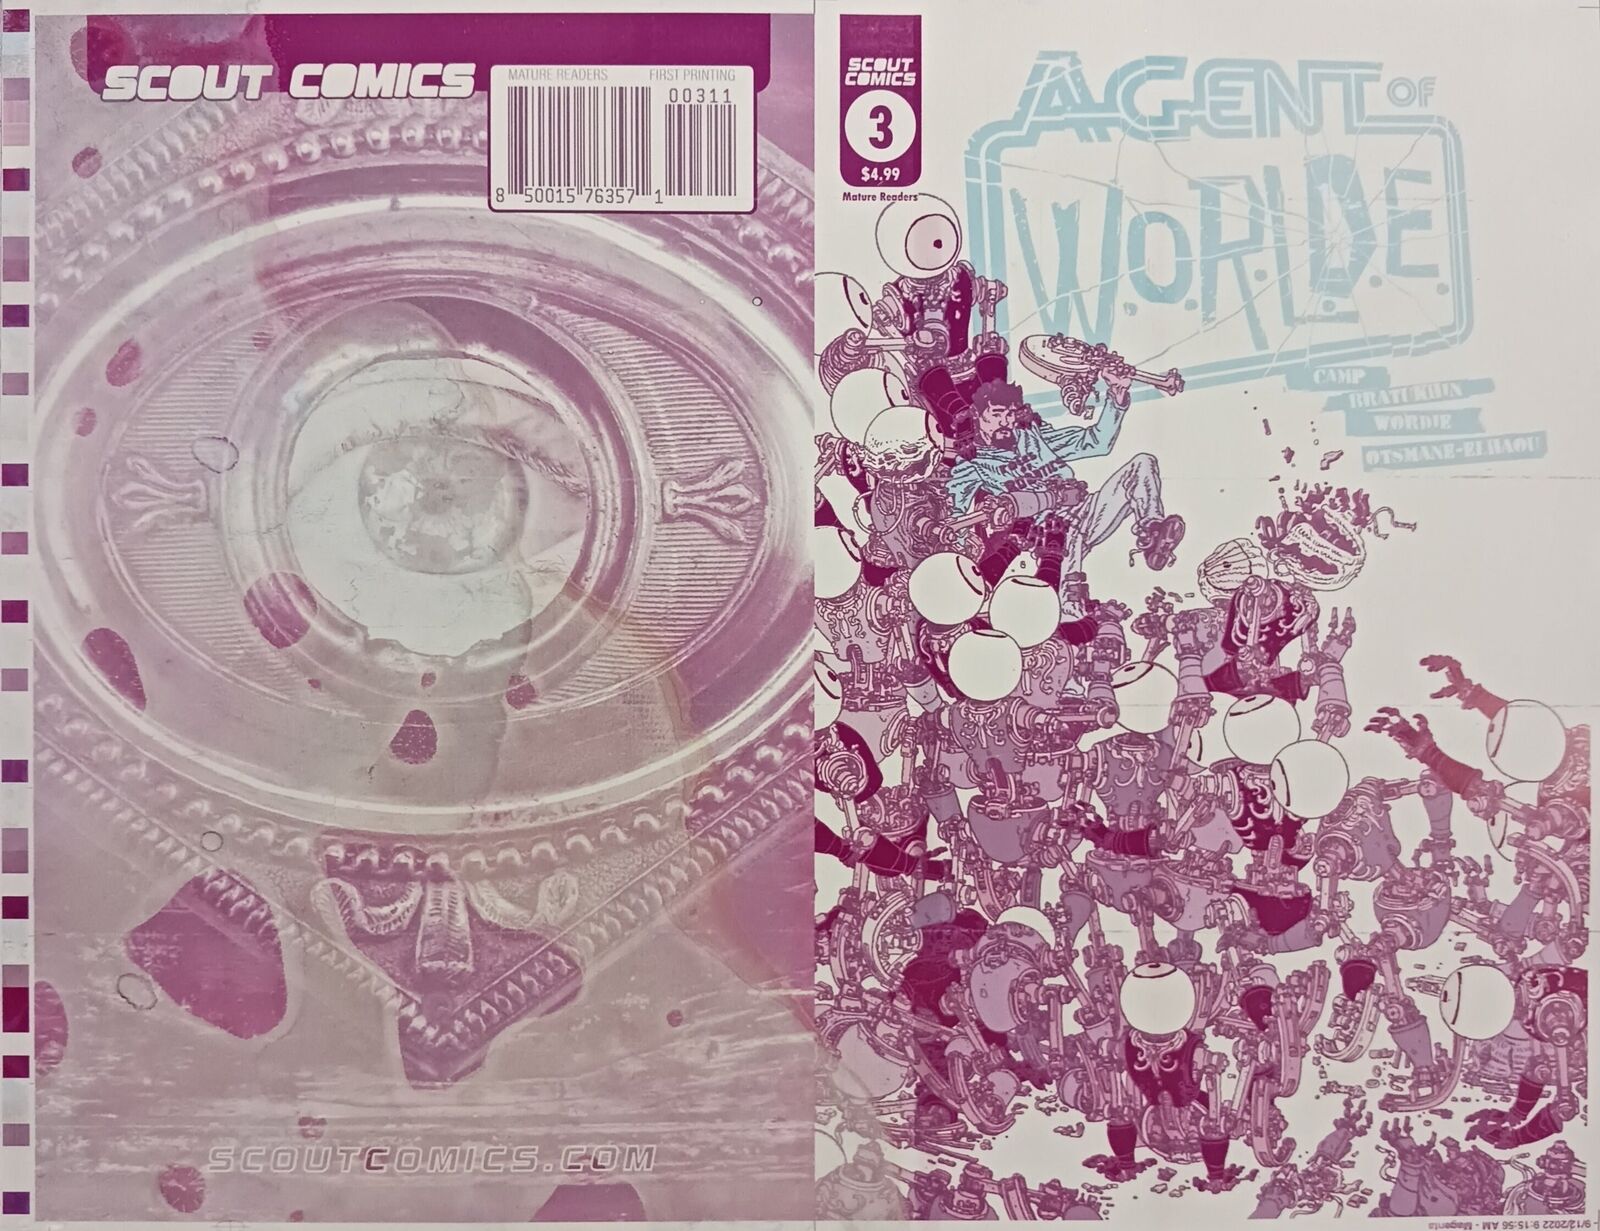 Agent of W.O.R.L.D.E #3 - Cover - Magenta - Comic Printer Plate - PRESSWORKS - F